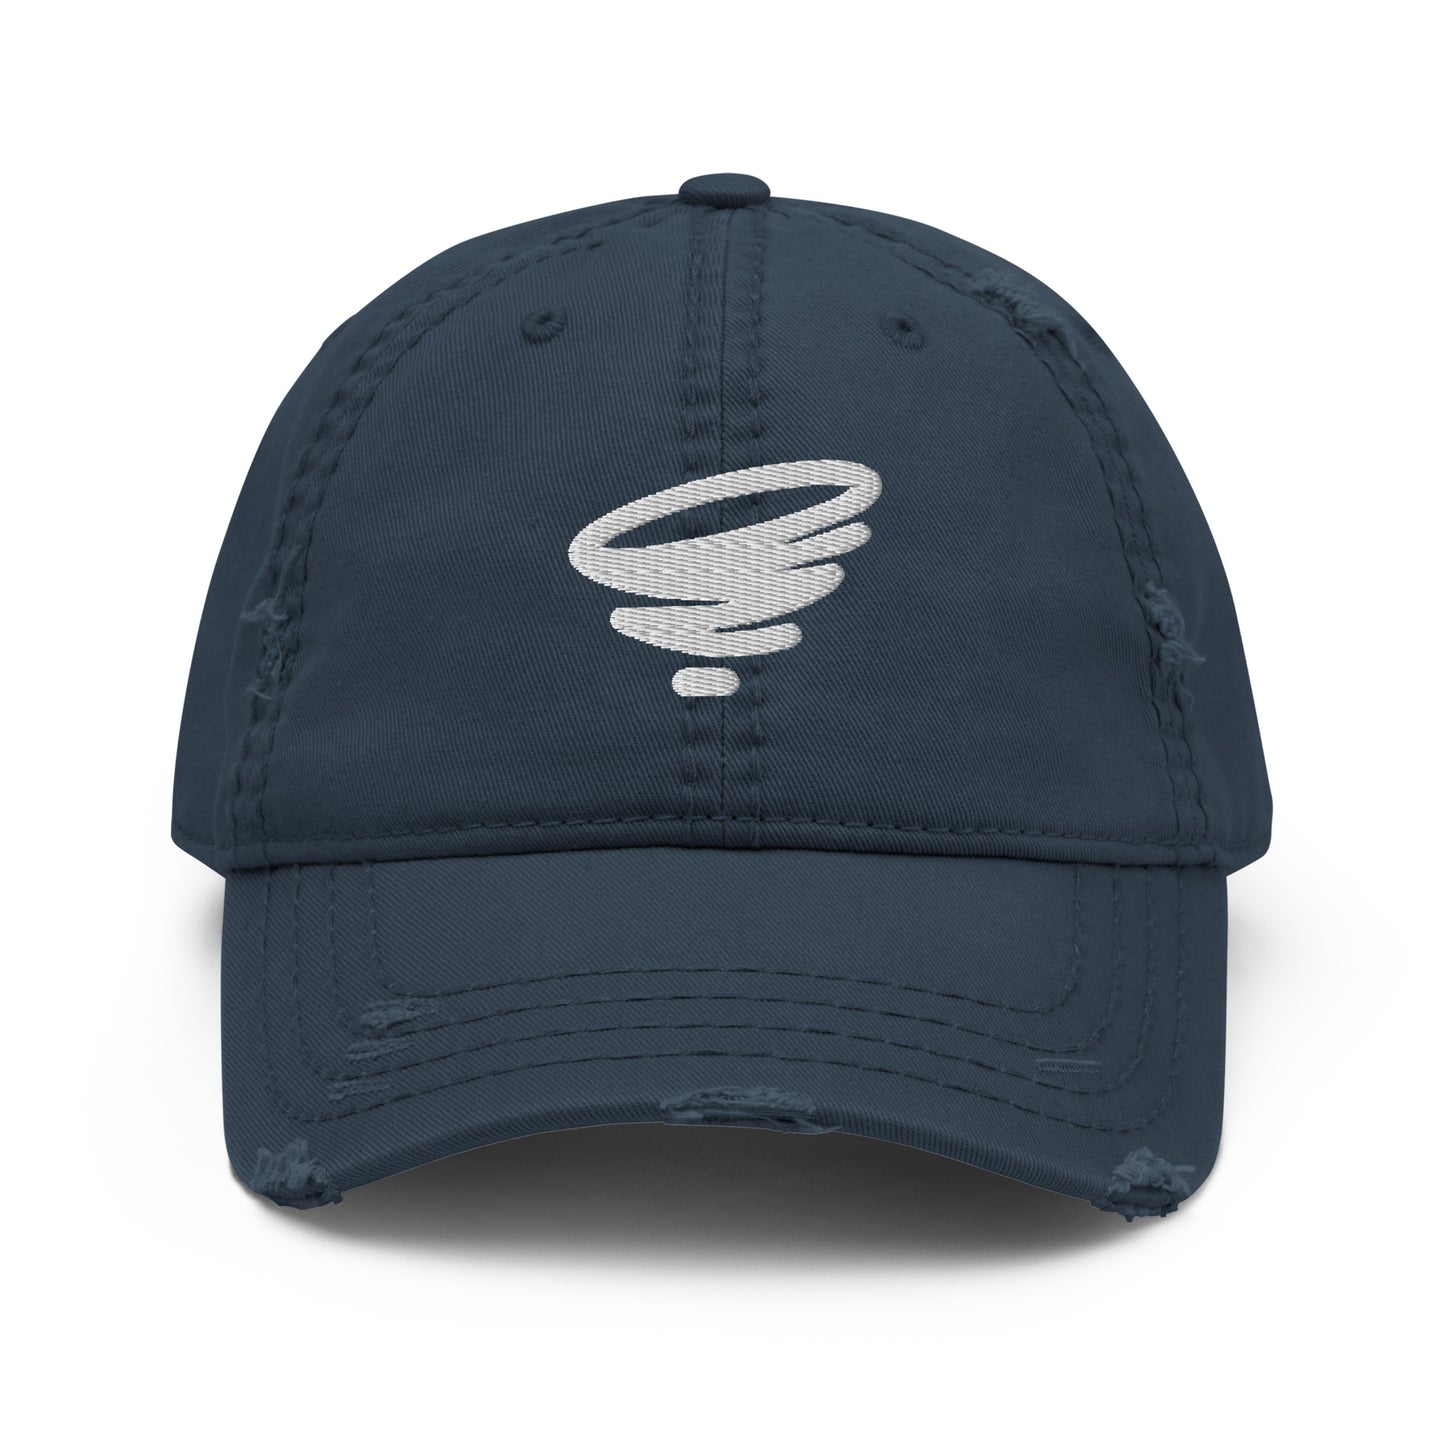 Tornado - Distressed Hat